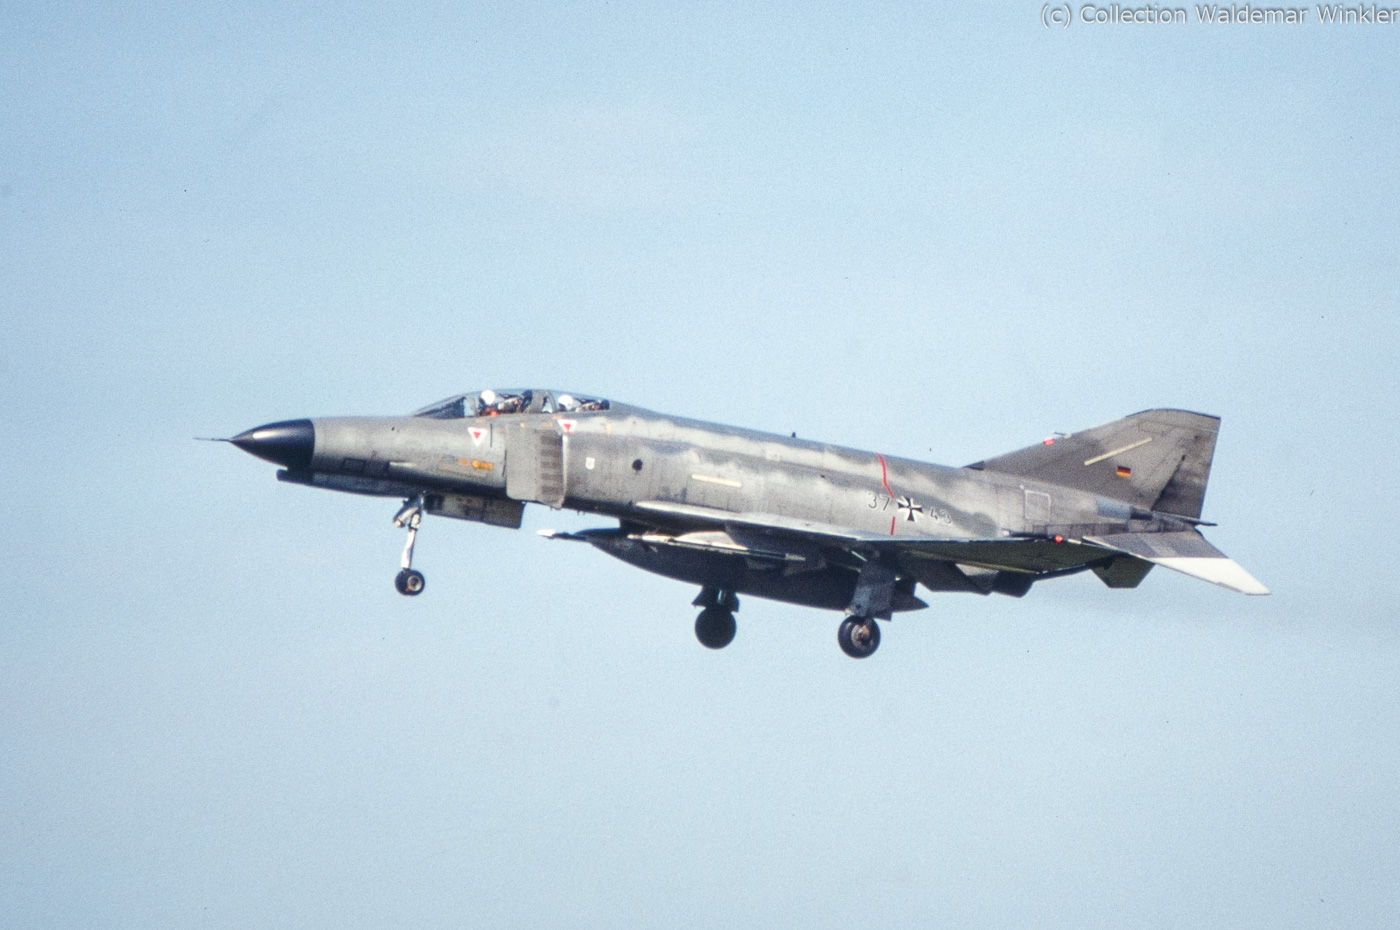 F-4_Phantom_II_DSC_2736.jpg